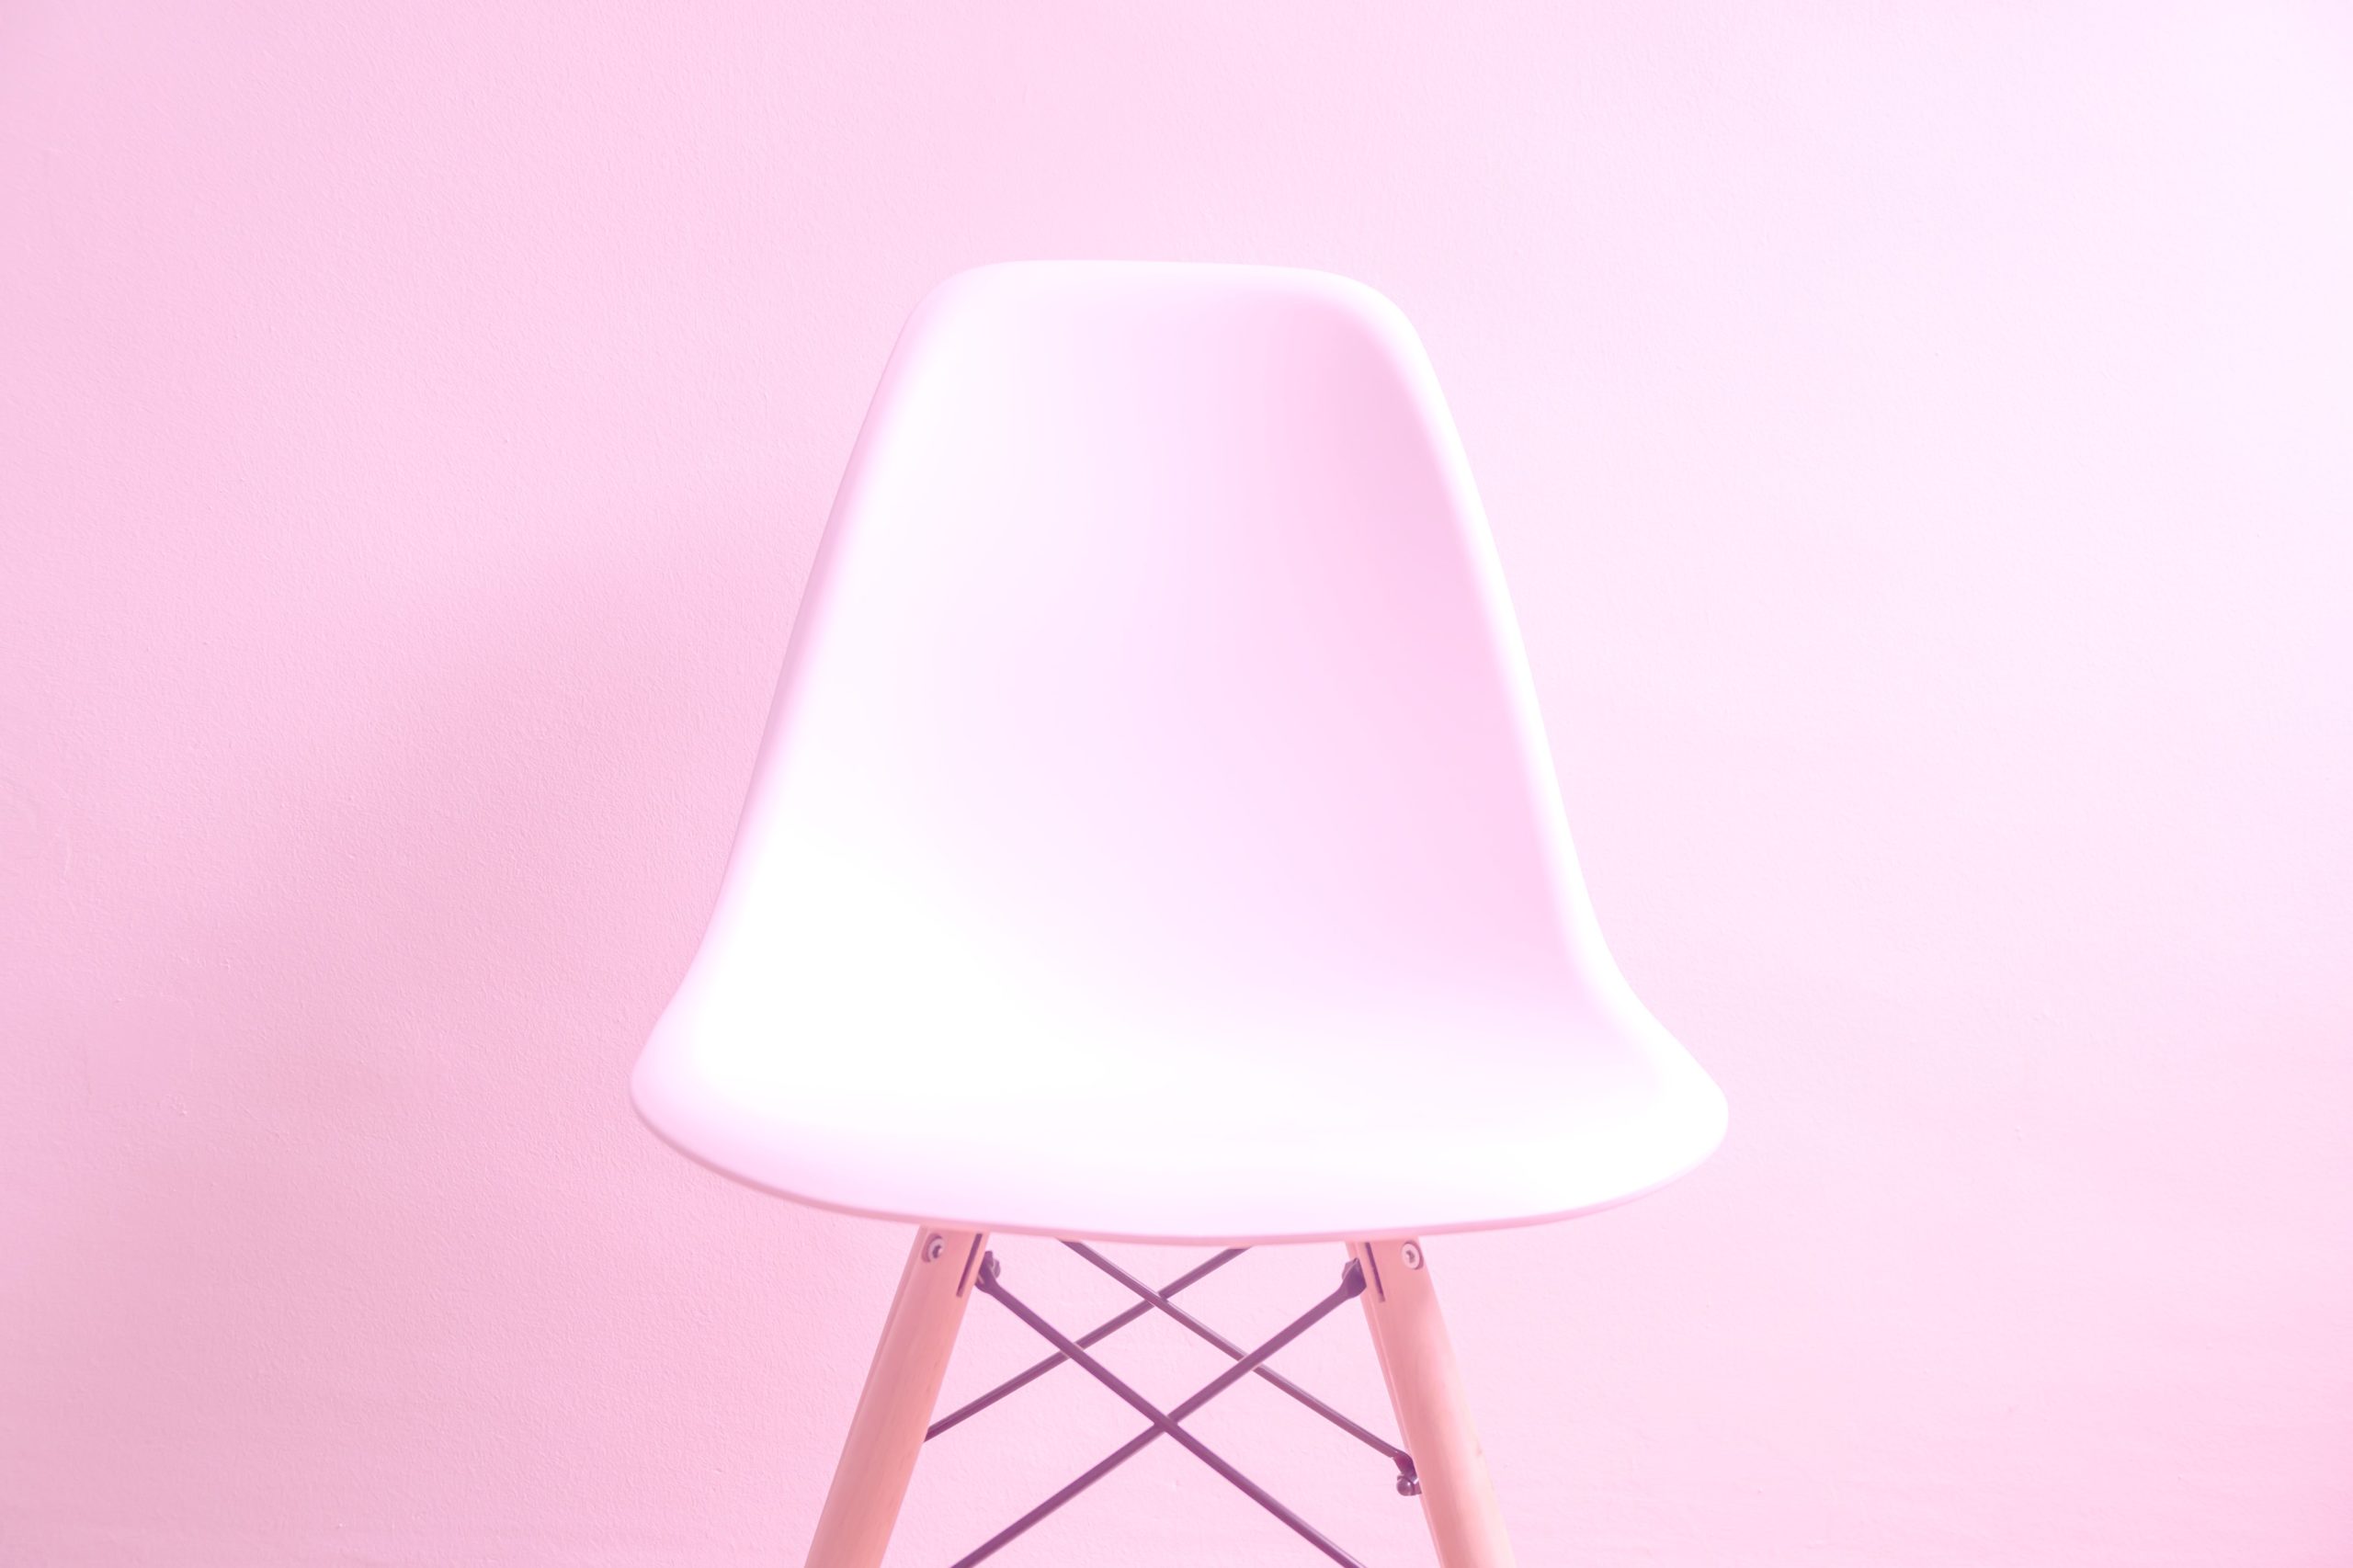 <img src="white.jpg" alt="white chair on a pink background"/> 